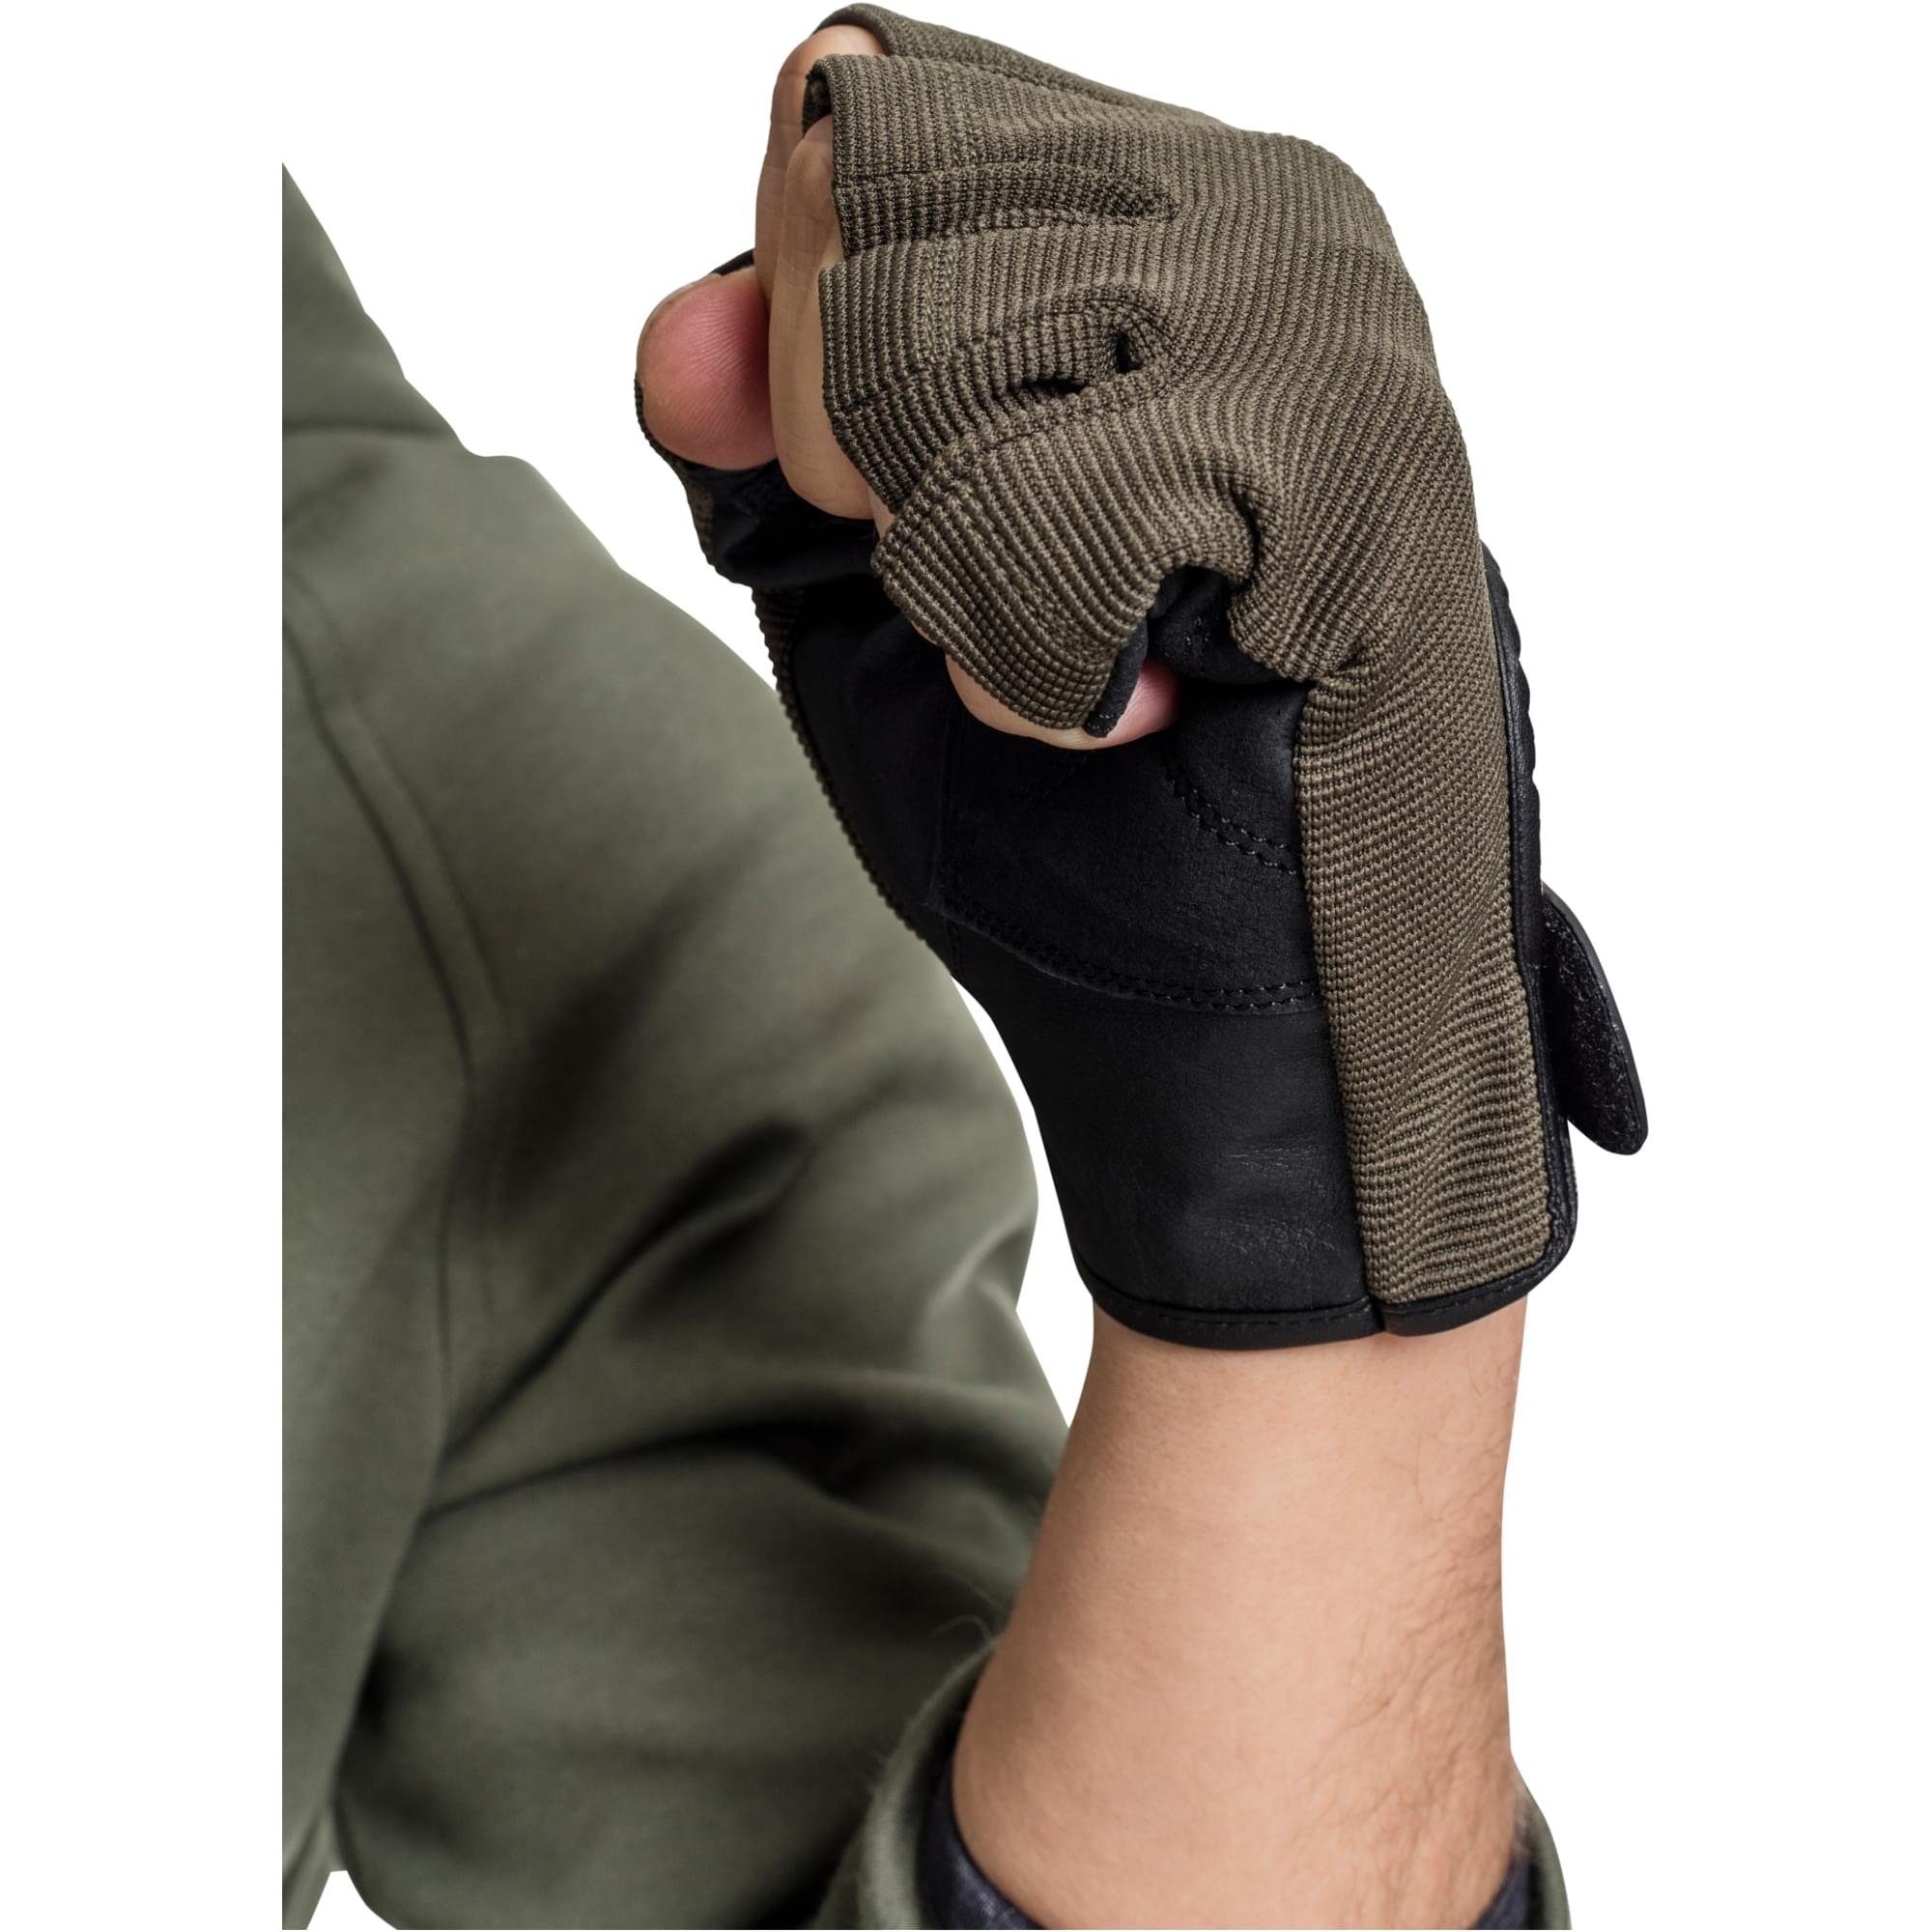 SPORTS Leder, GORILLA Fitness Trainingshandschuhe Handschuhe - Khaki Sporthandschuhe Farbwahl XS/S/M/L/XL, -